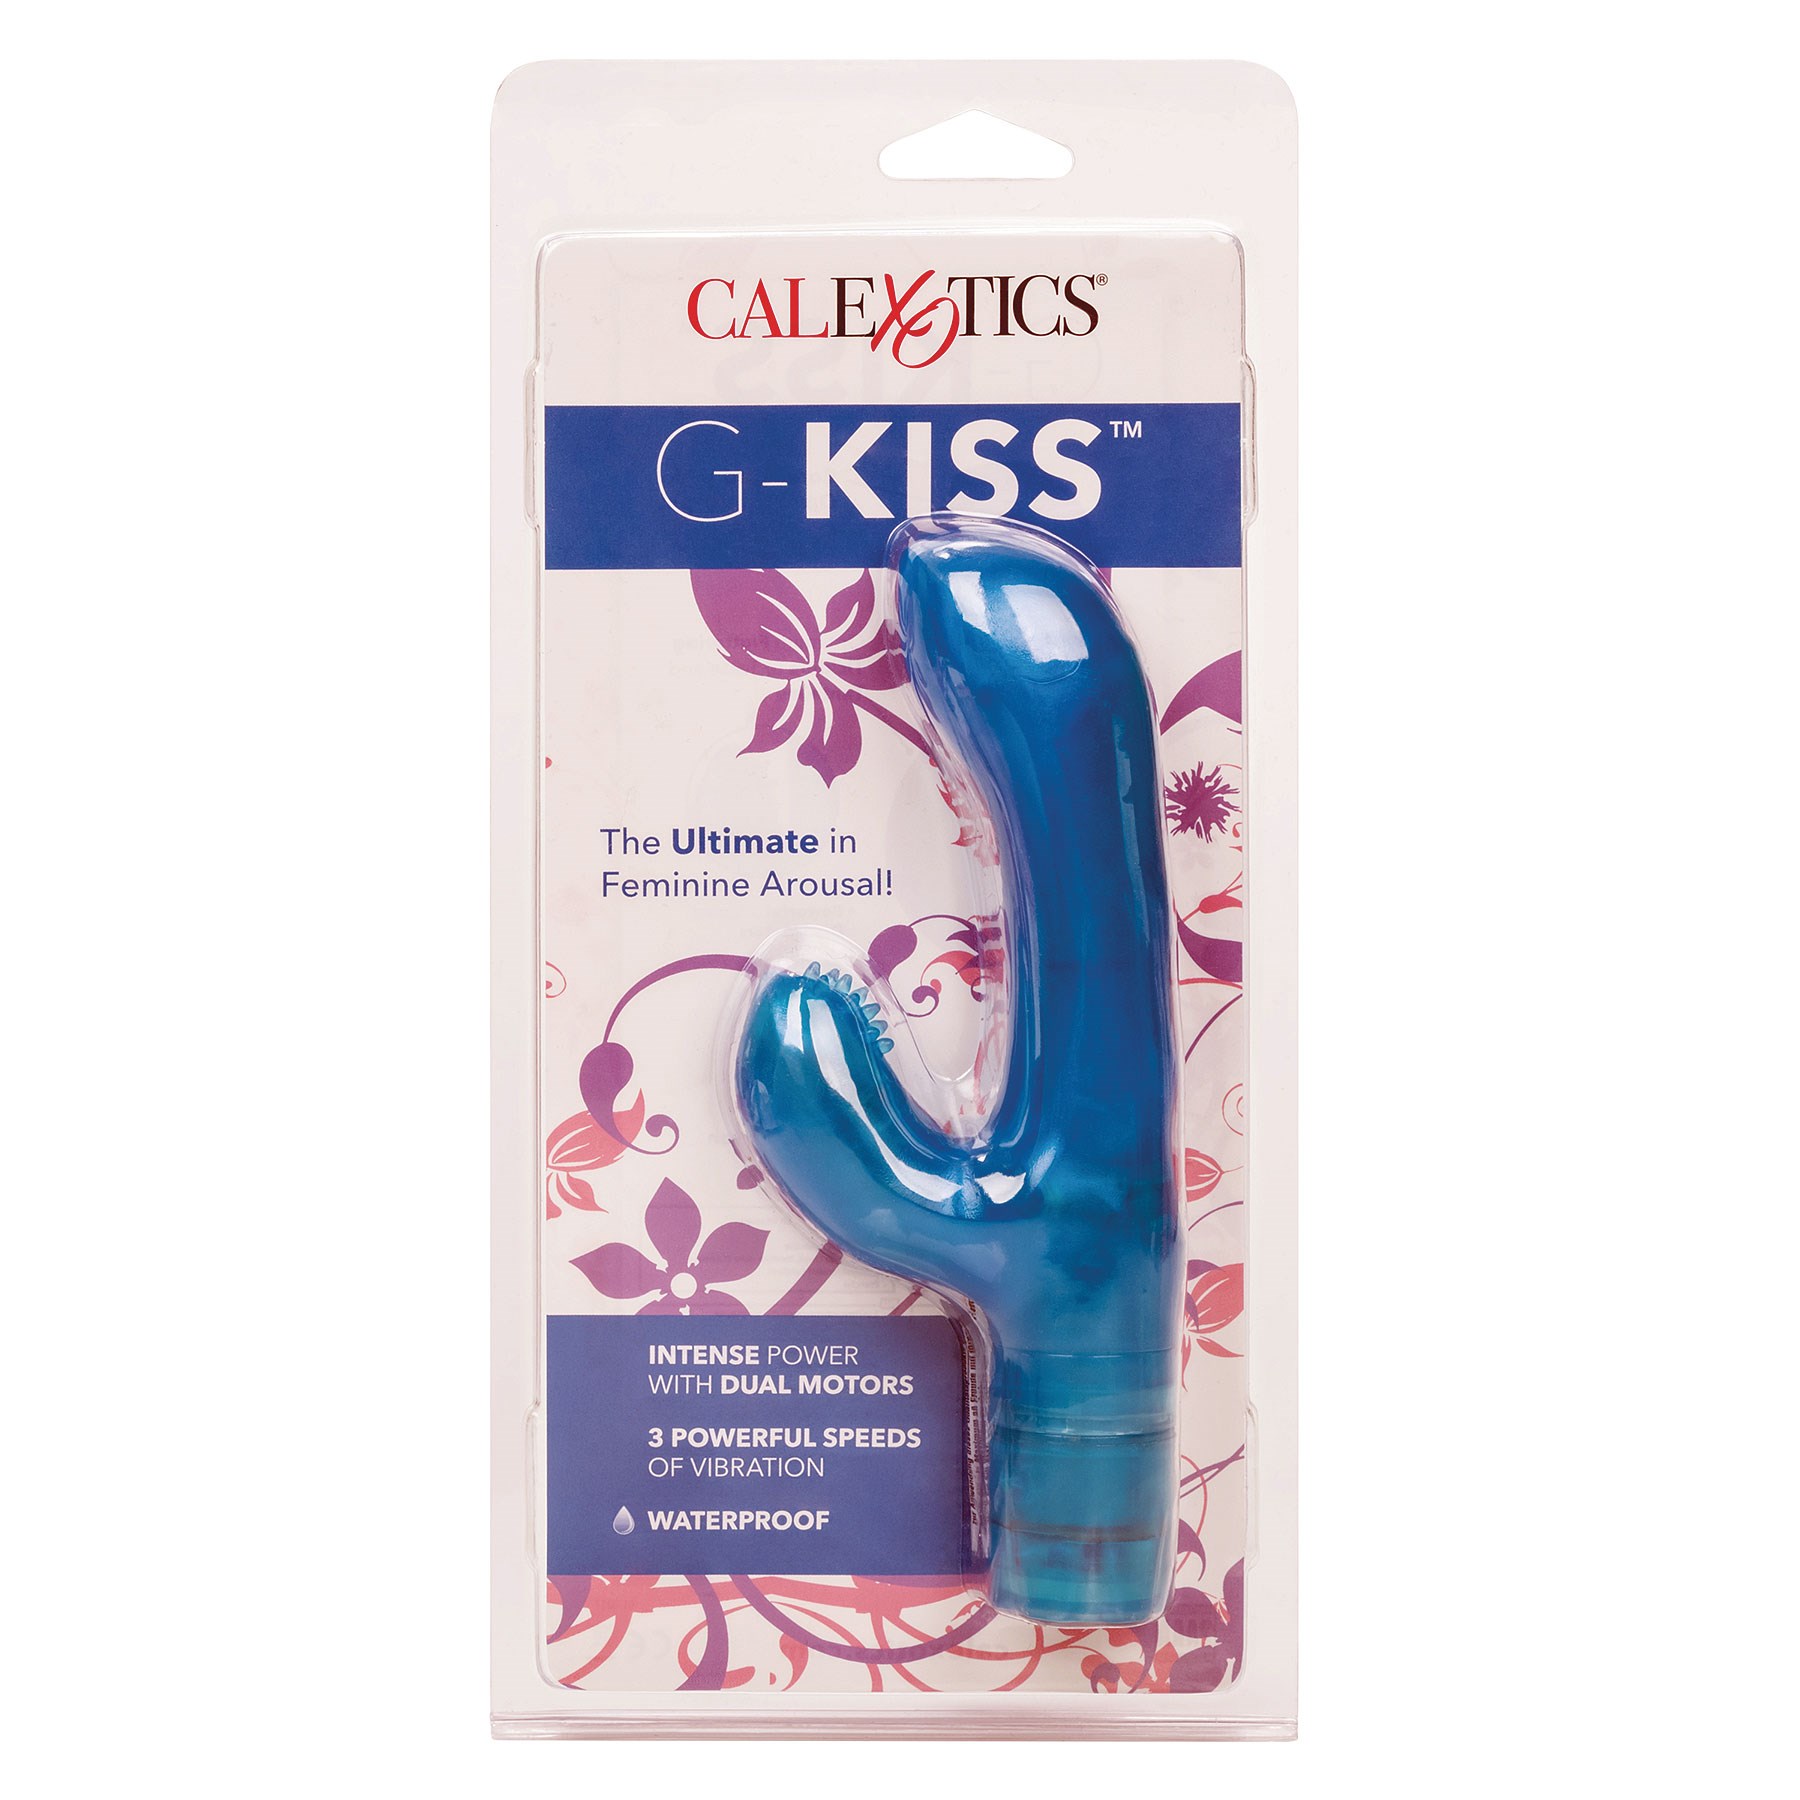 G-Kiss Vibrator packaging